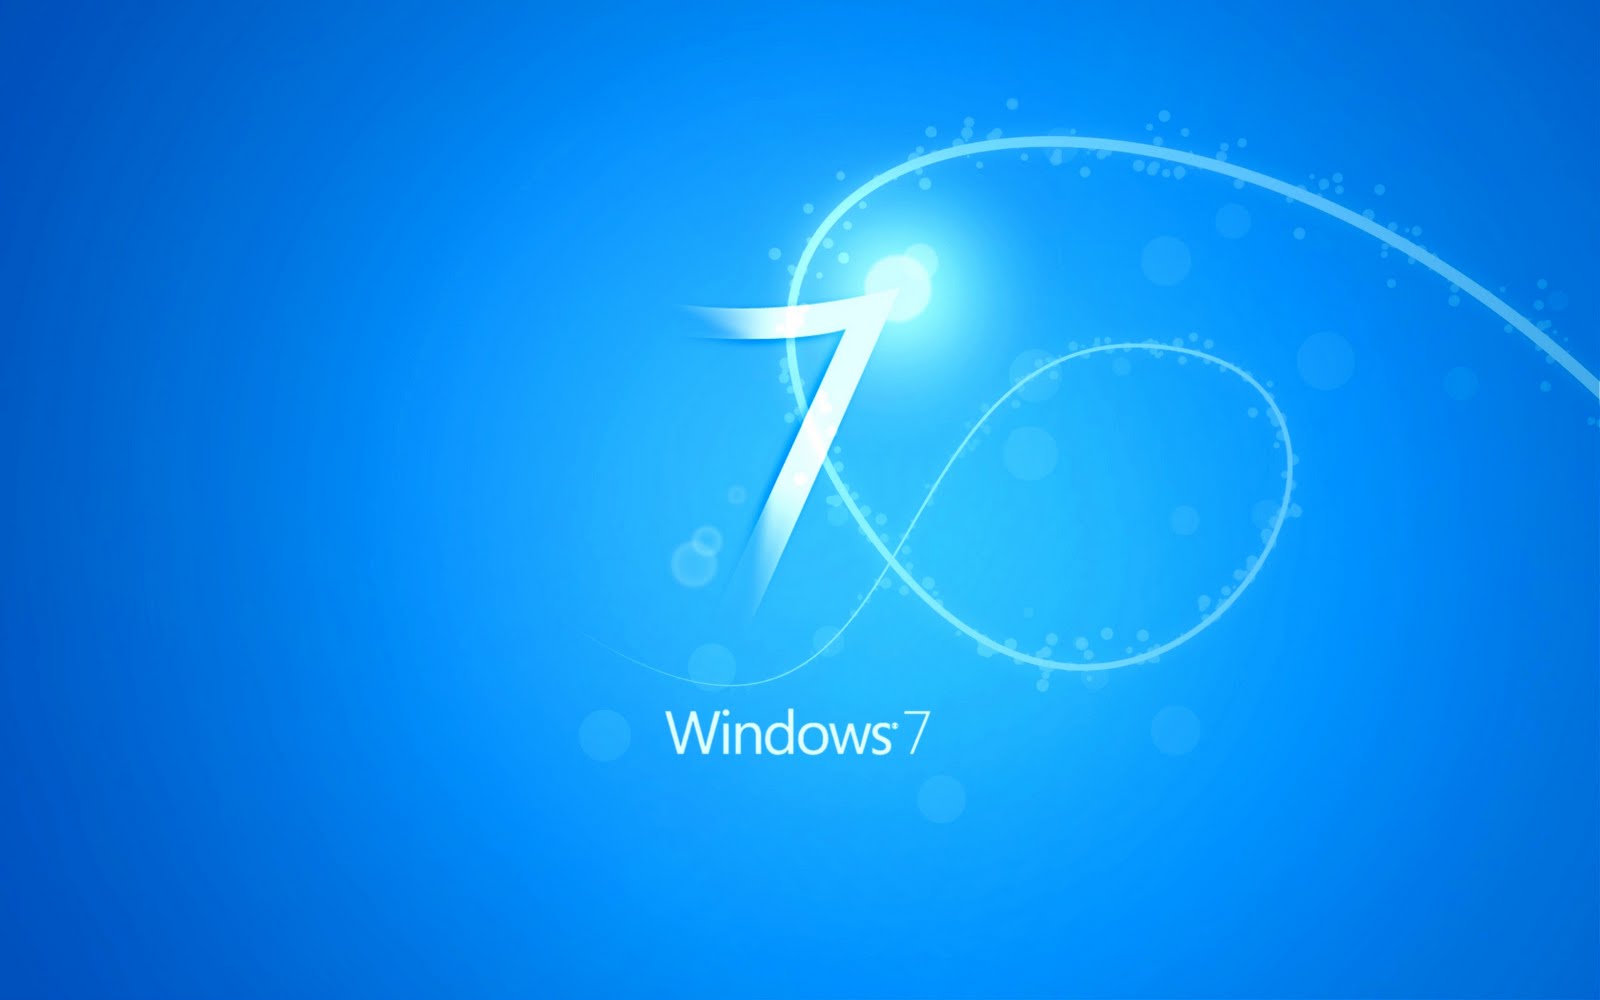 hd vélo fonds d'écran windows 7,bleu,jour,ciel,aqua,atmosphère